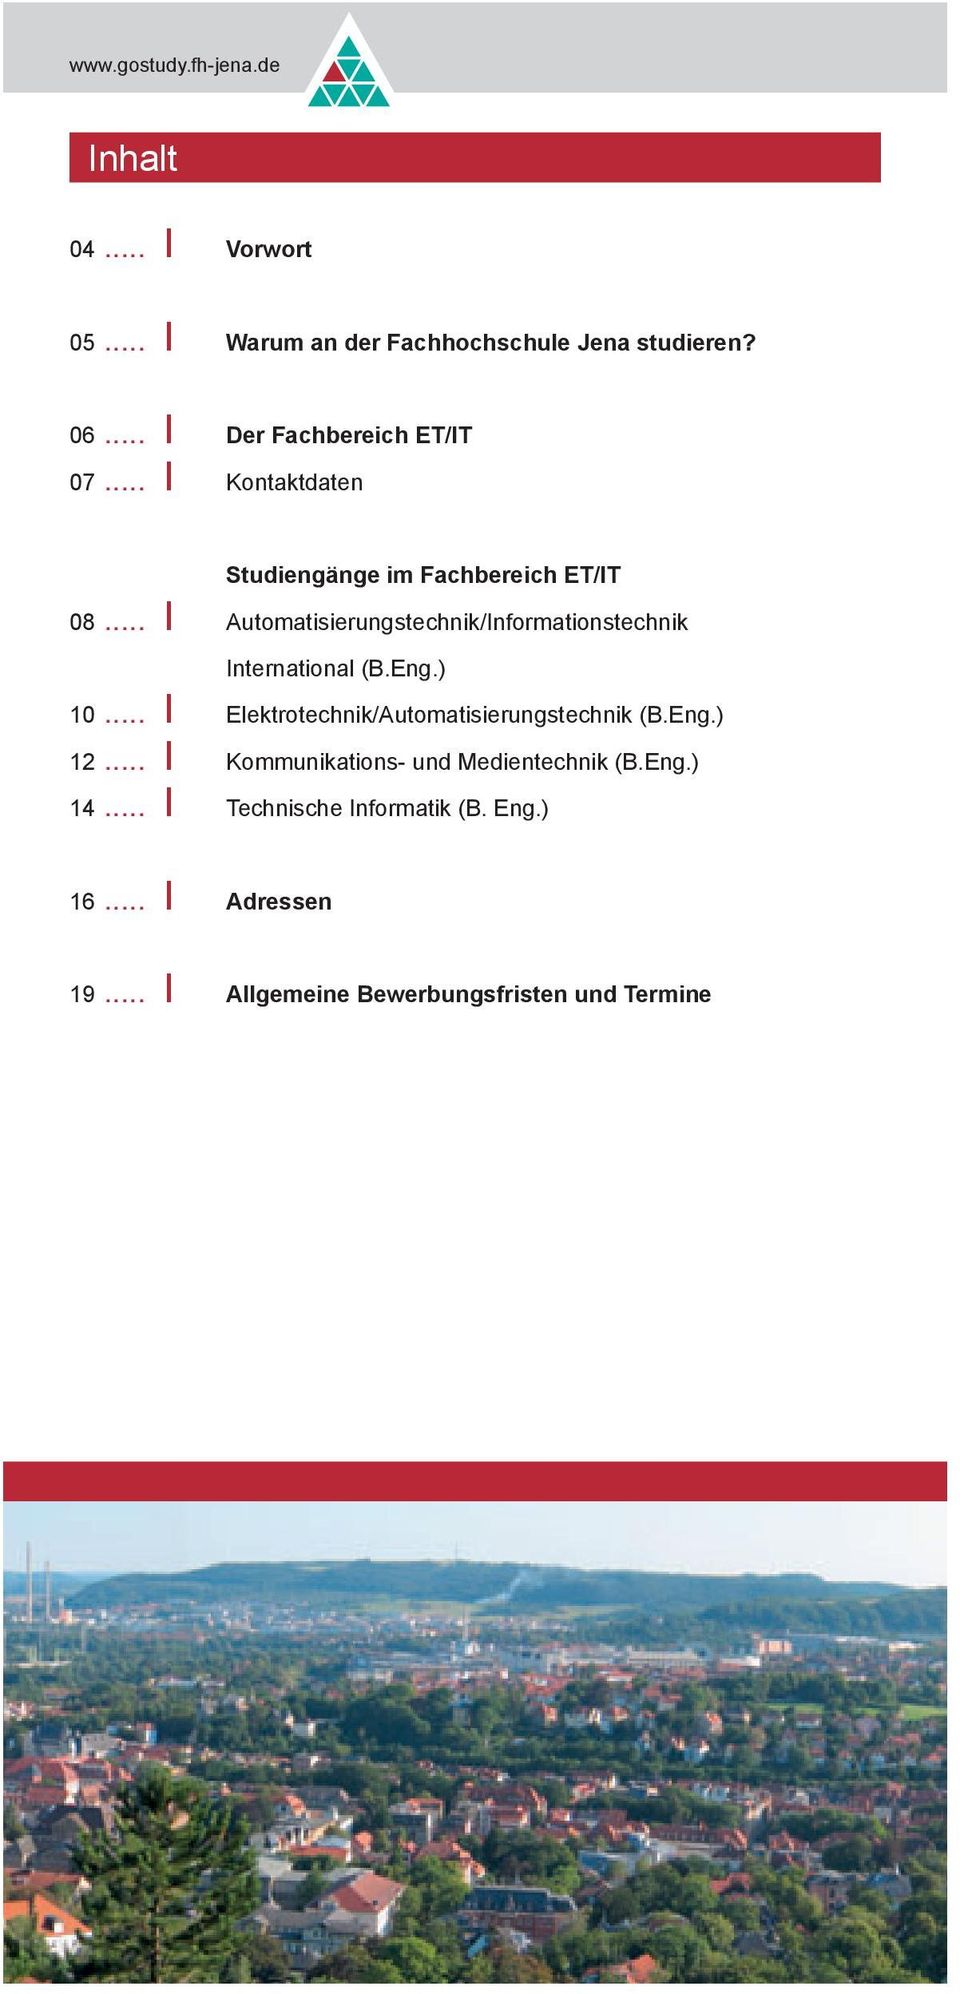 .. I Automatisierungstechnik/Informationstechnik International (B.Eng.) 10.